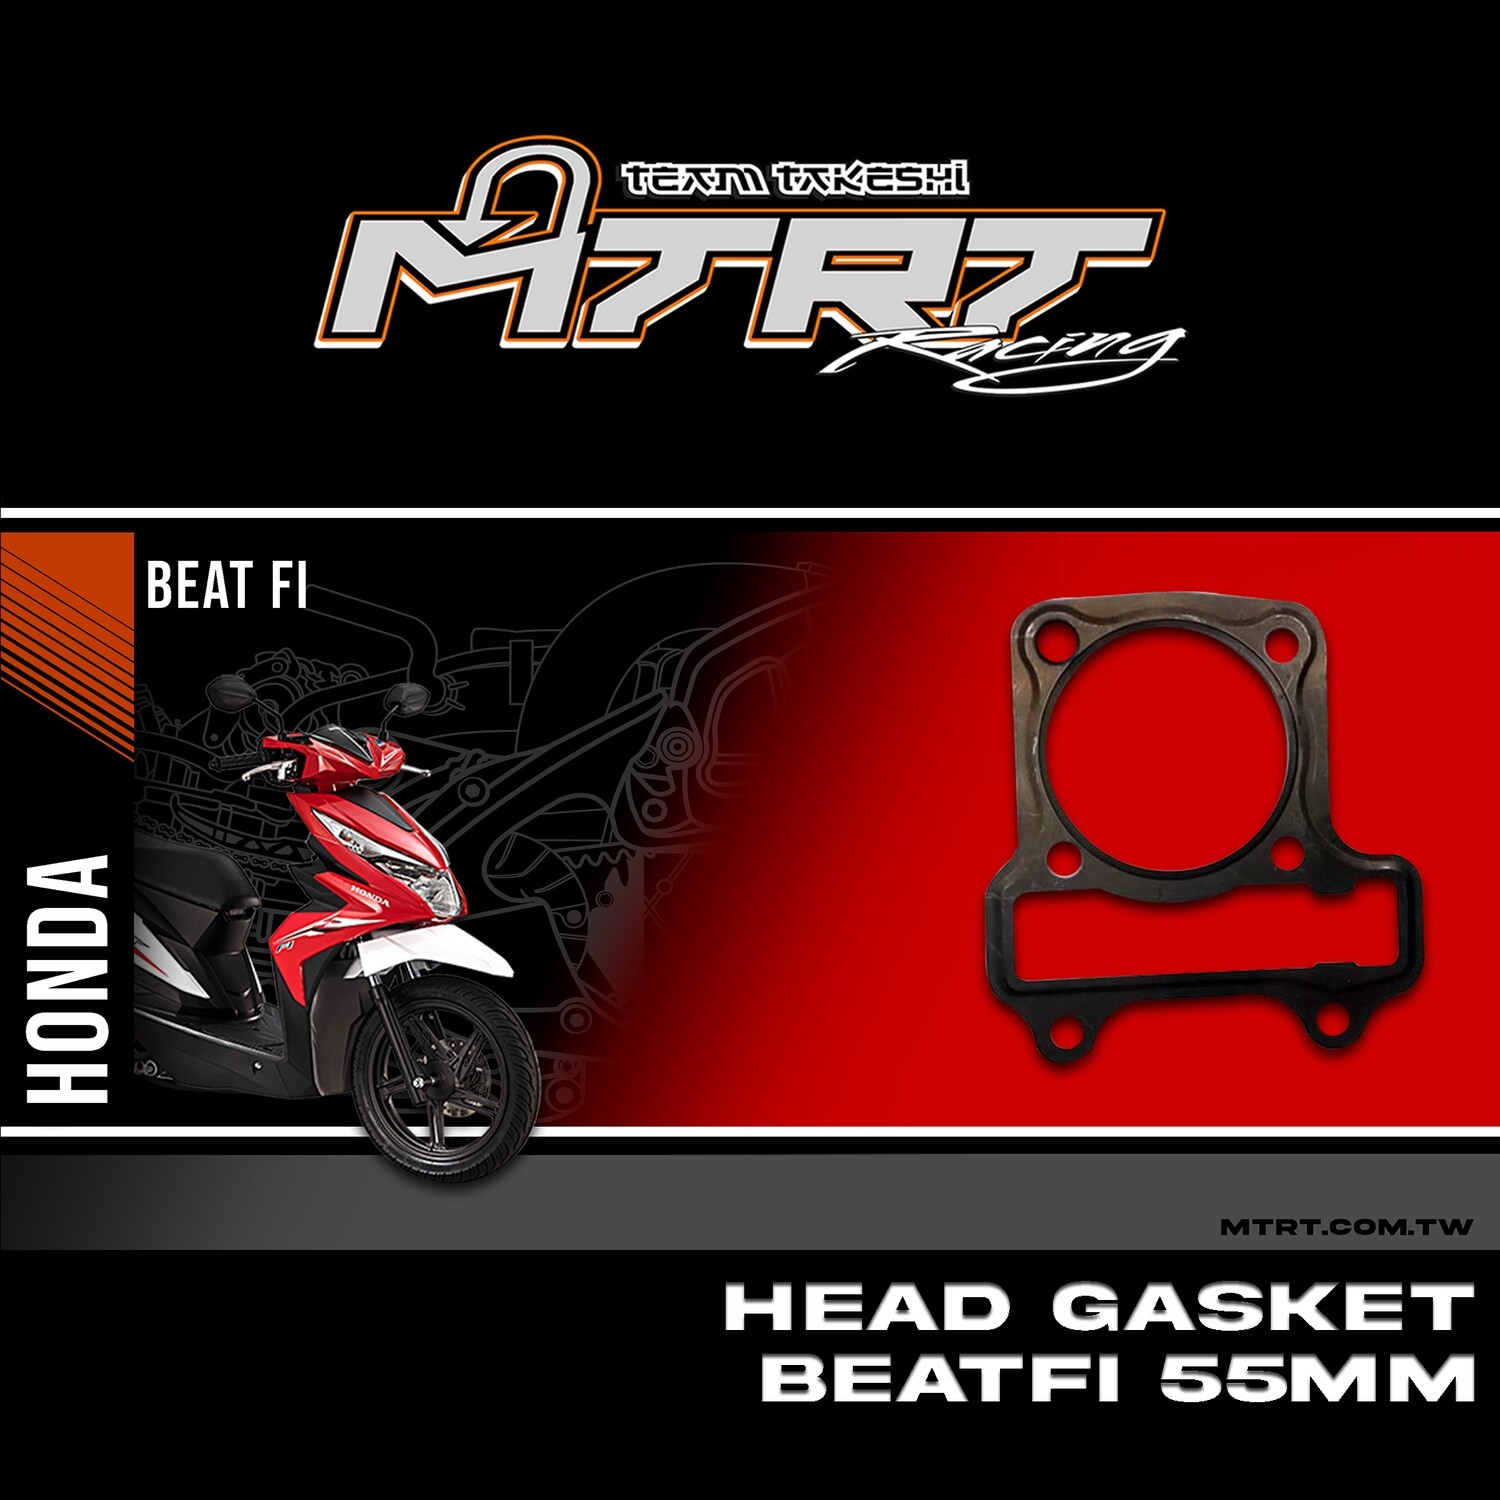 Head Gaster Beatfi 55mm